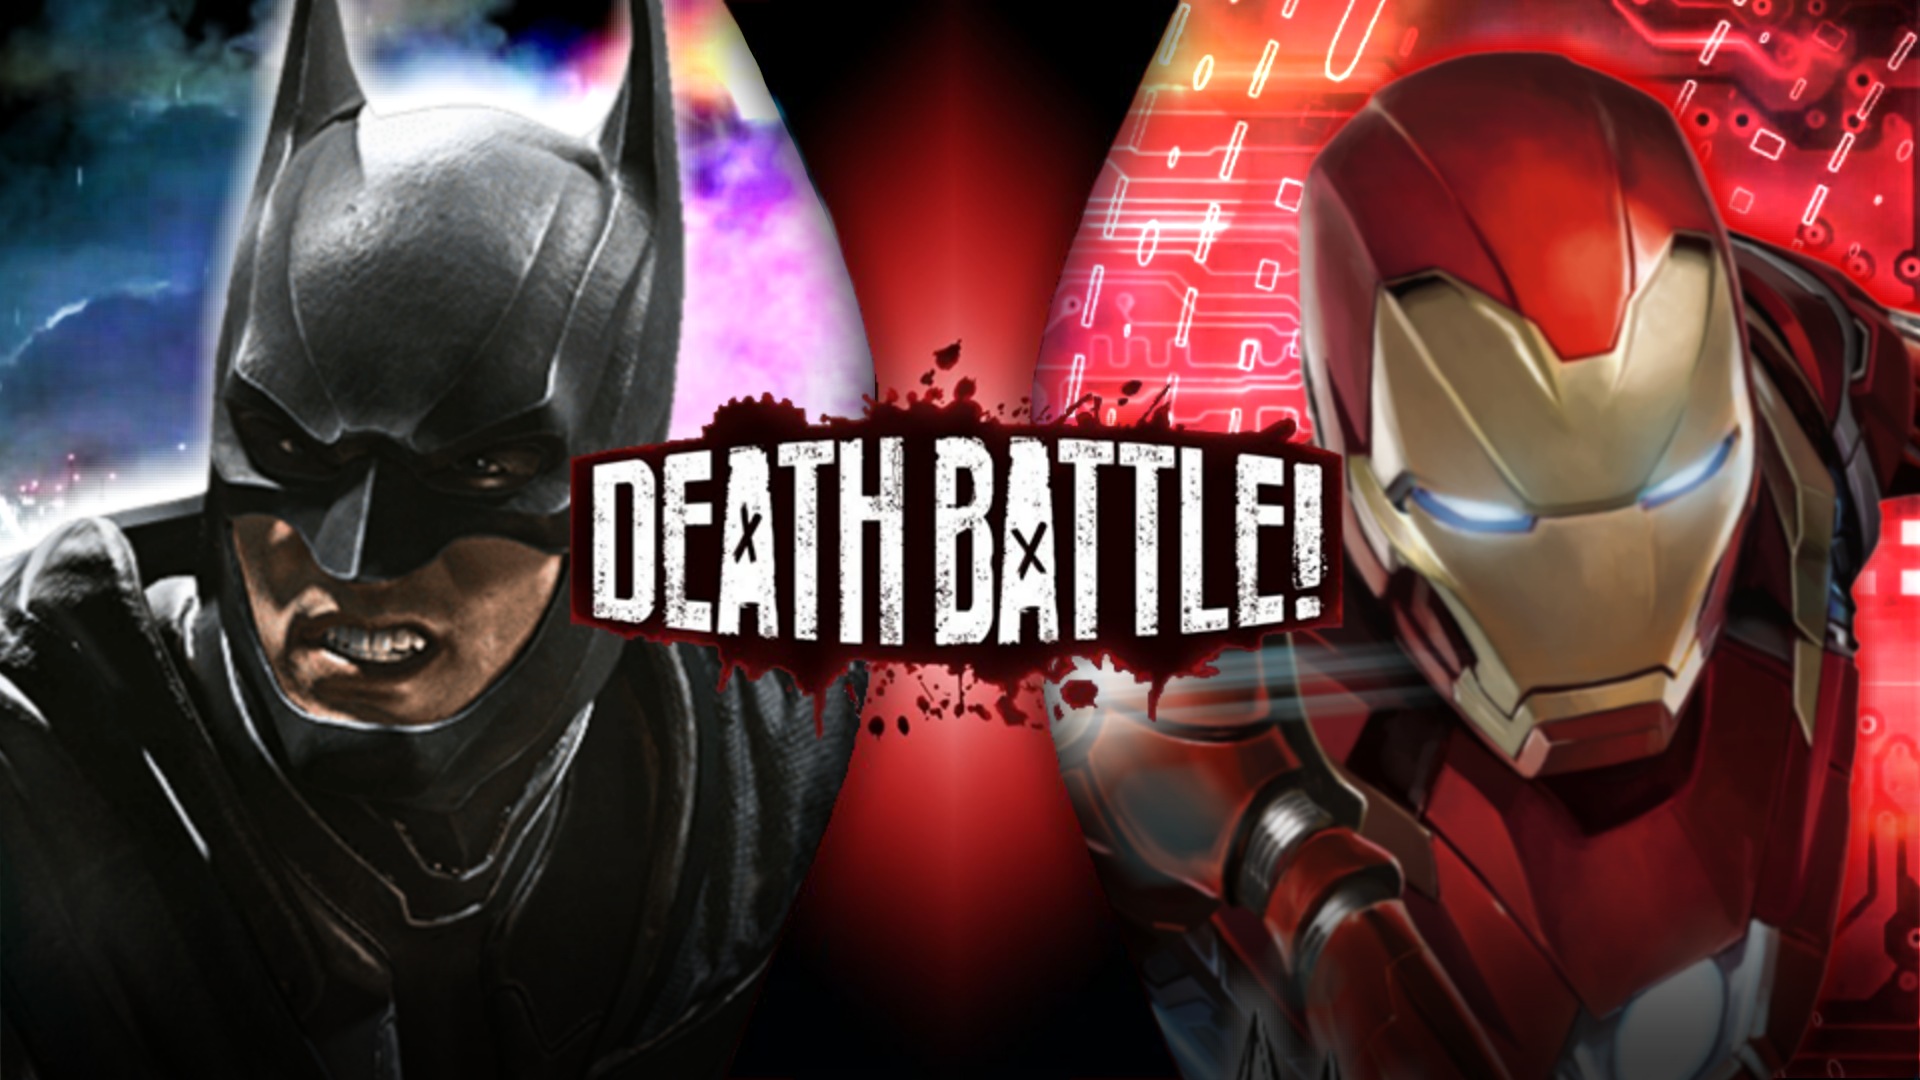 Batman VS Iron Man  DEATH BATTLE by ibrahim20 on DeviantArt